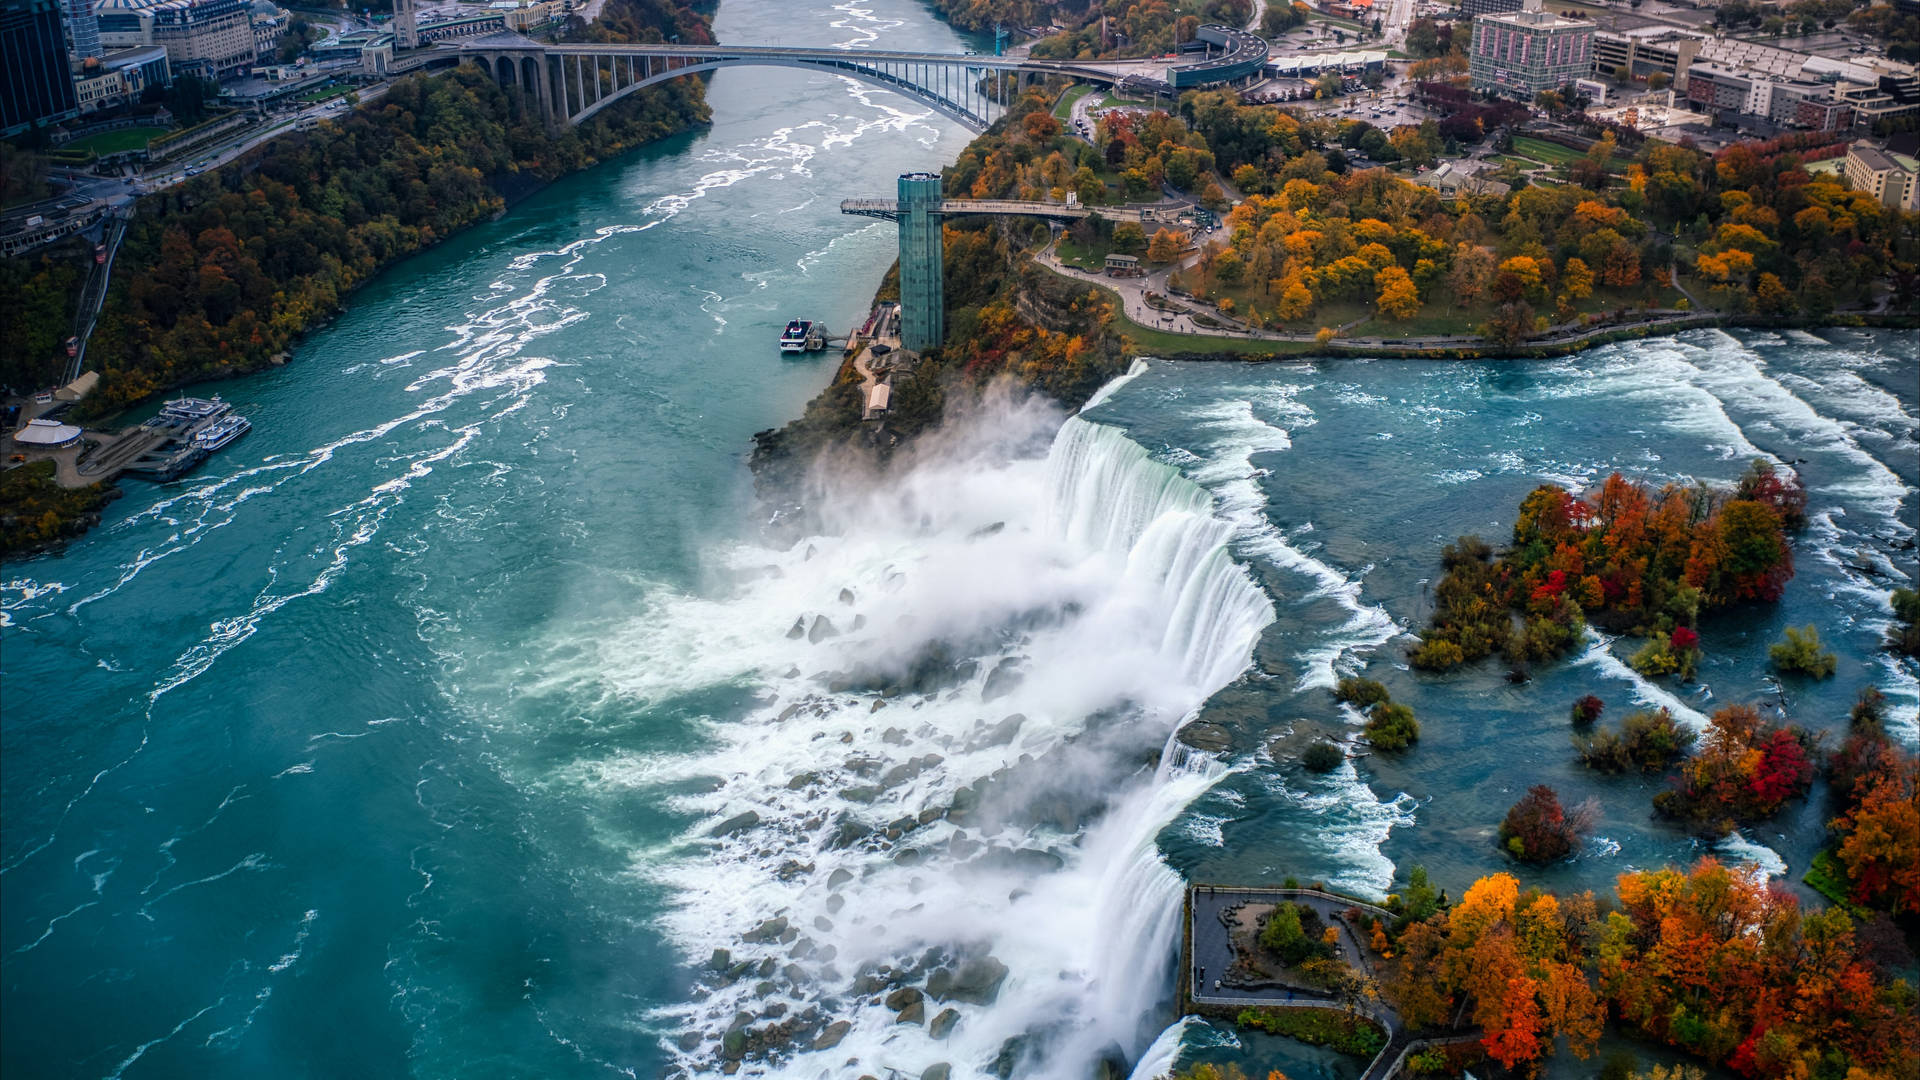 Niagara Falls 5228X2941 Wallpaper and Background Image